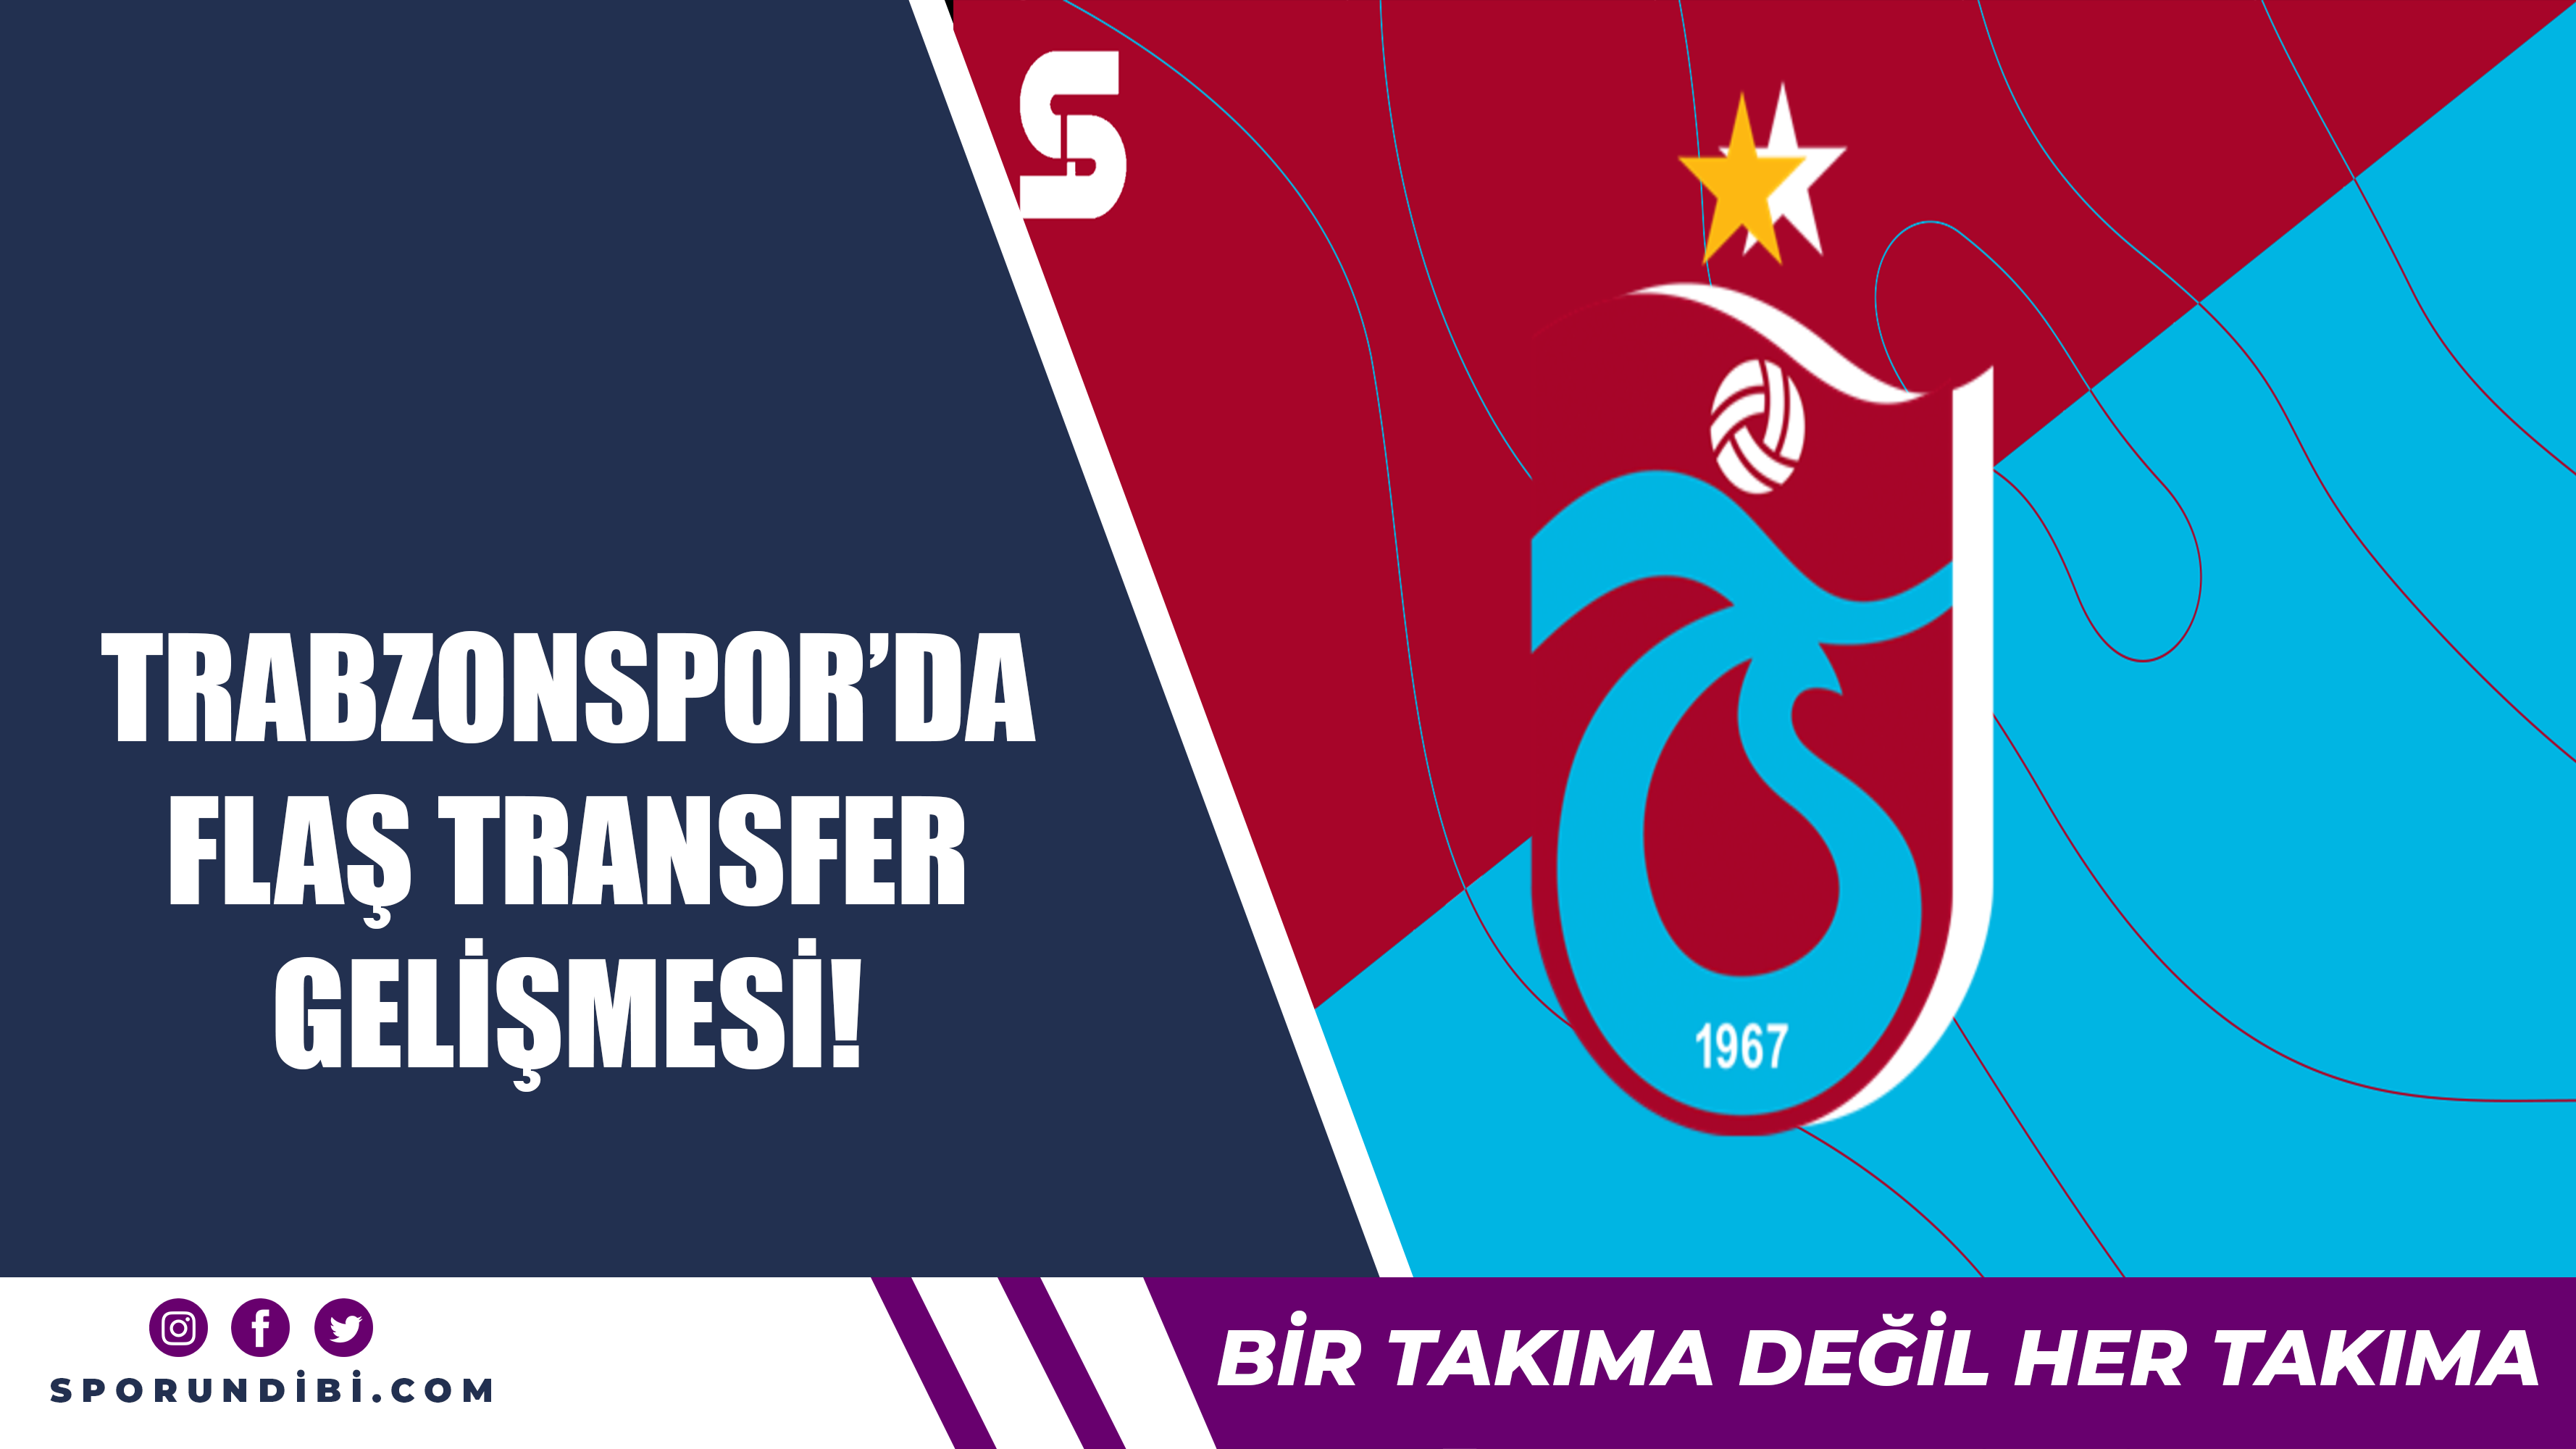 Trabzonspor'da flaş transfer gelişmesi!